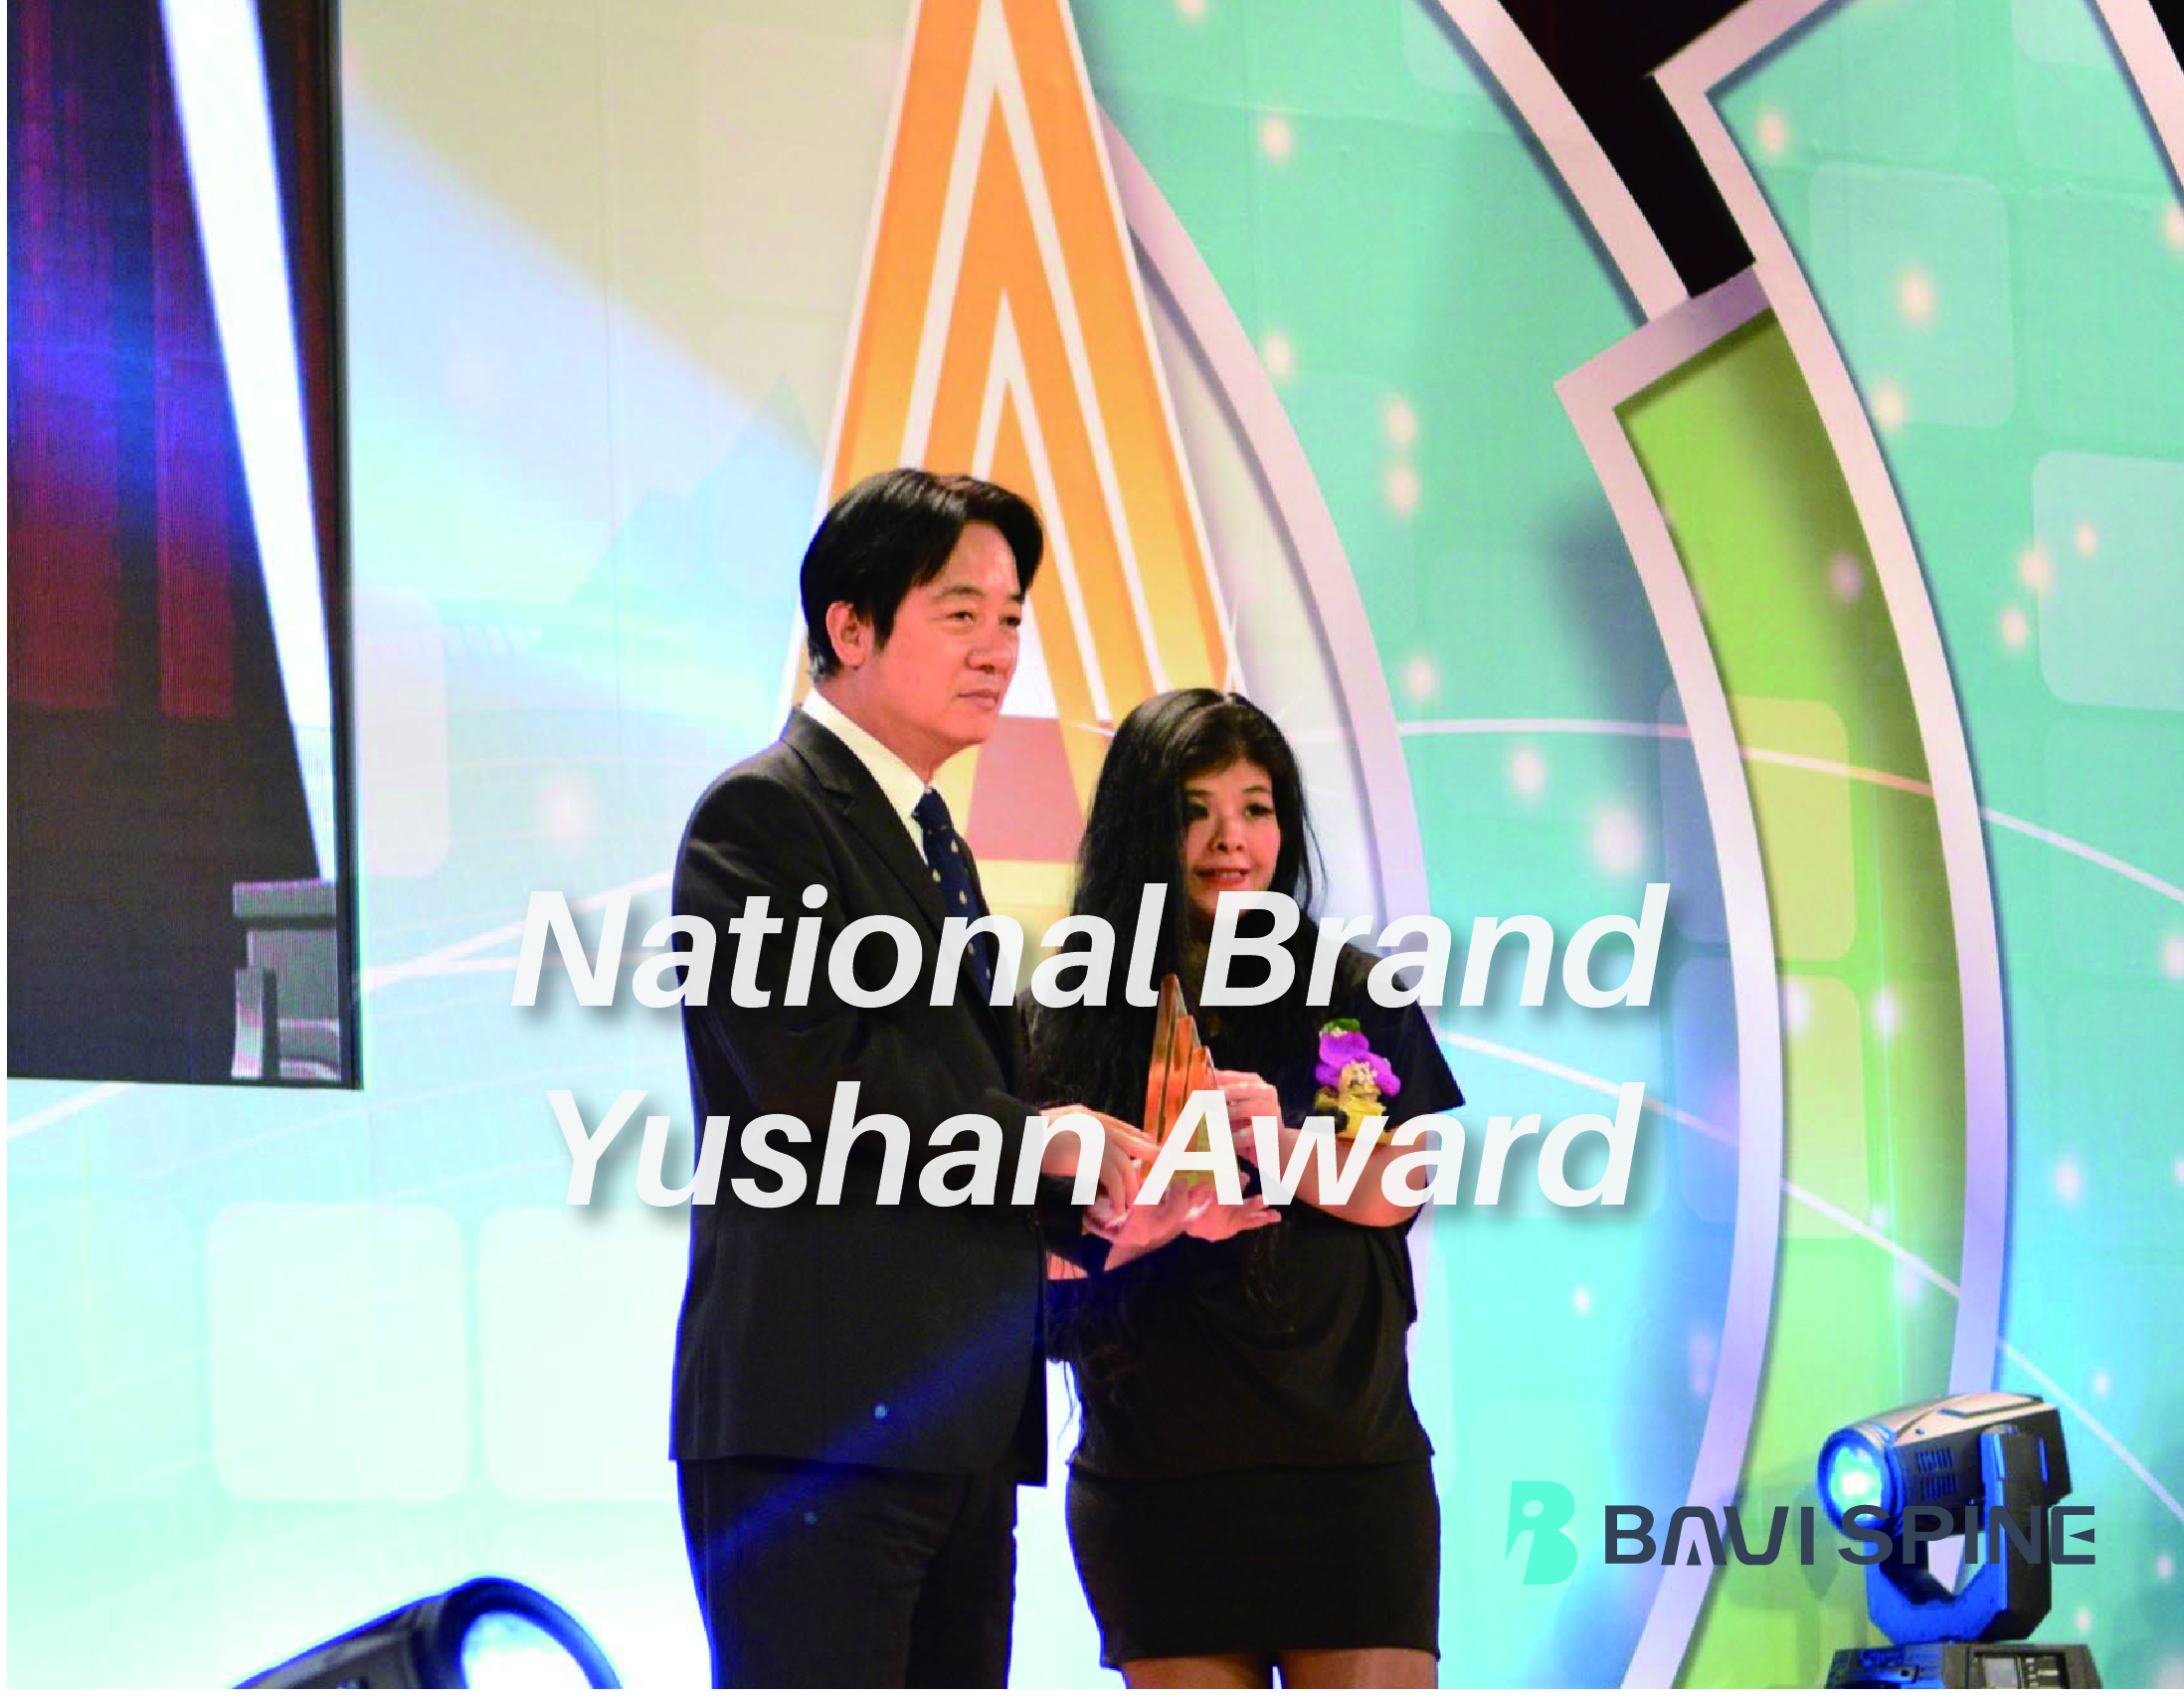 BAUI Awarded National Brand Yushan Award